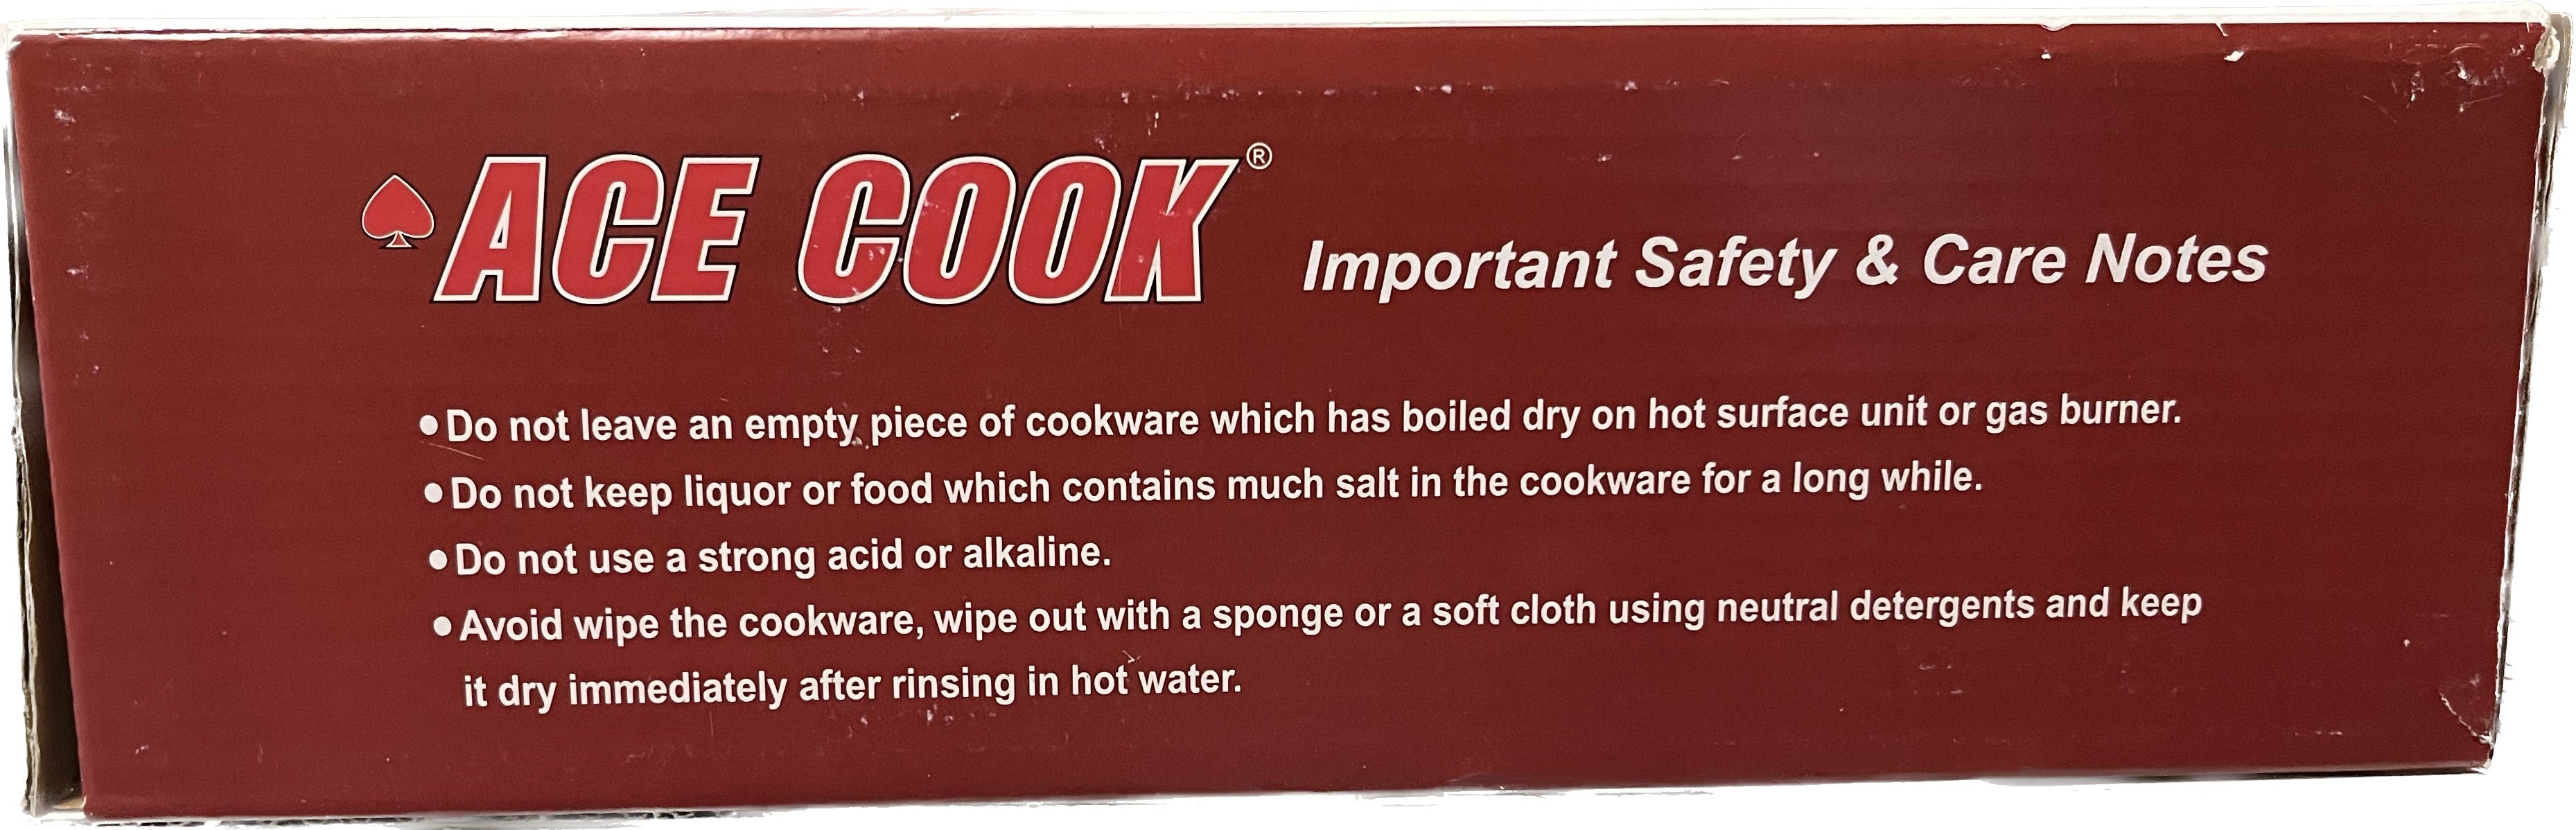 Ace Cook Non-Stick Cookware